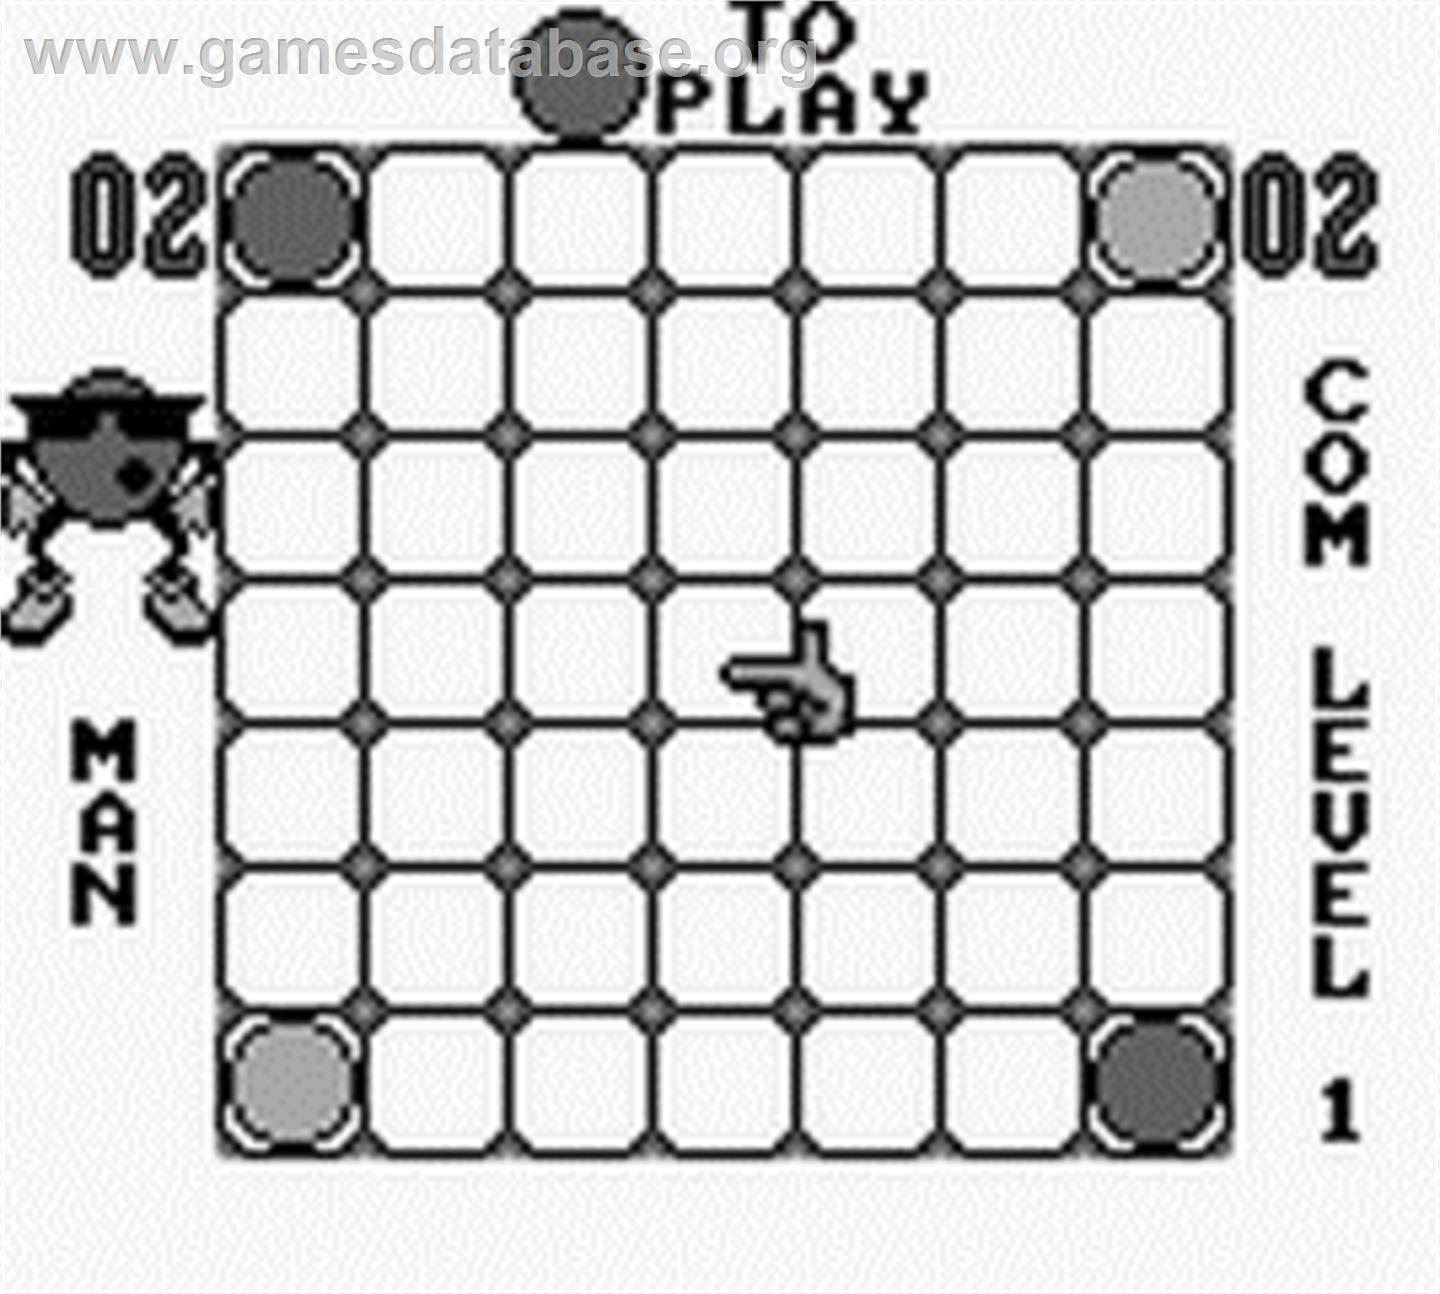 Spot - Nintendo Game Boy - Artwork - In Game